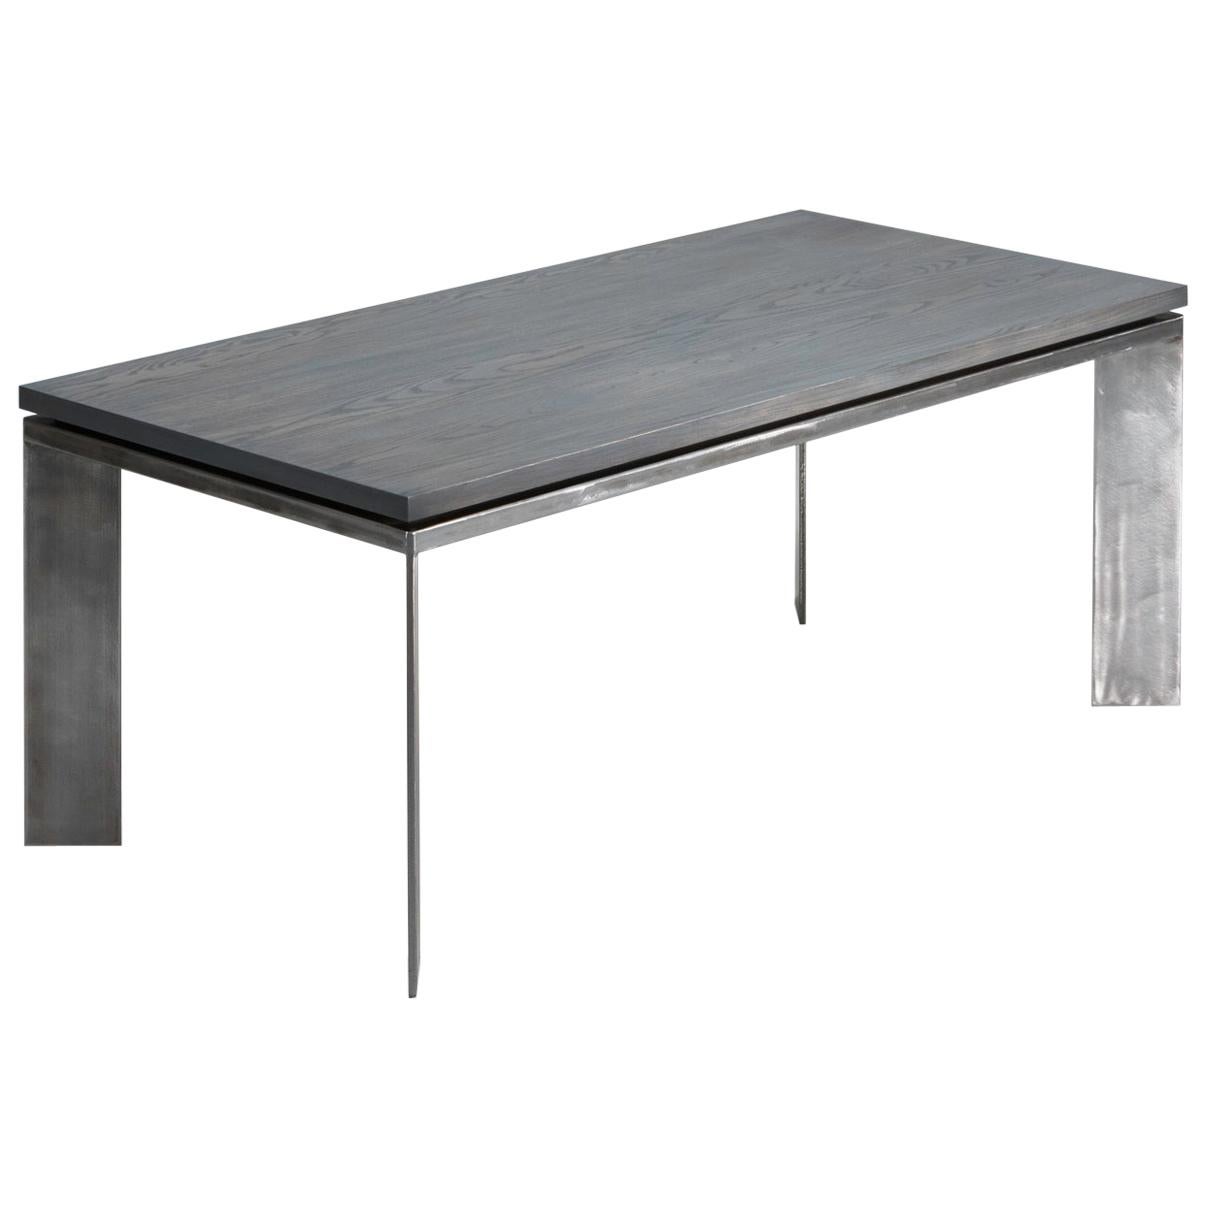 Slate Gray Ashwood Dining Table on Brushed Steel Base "Charlevoix Dining Table"